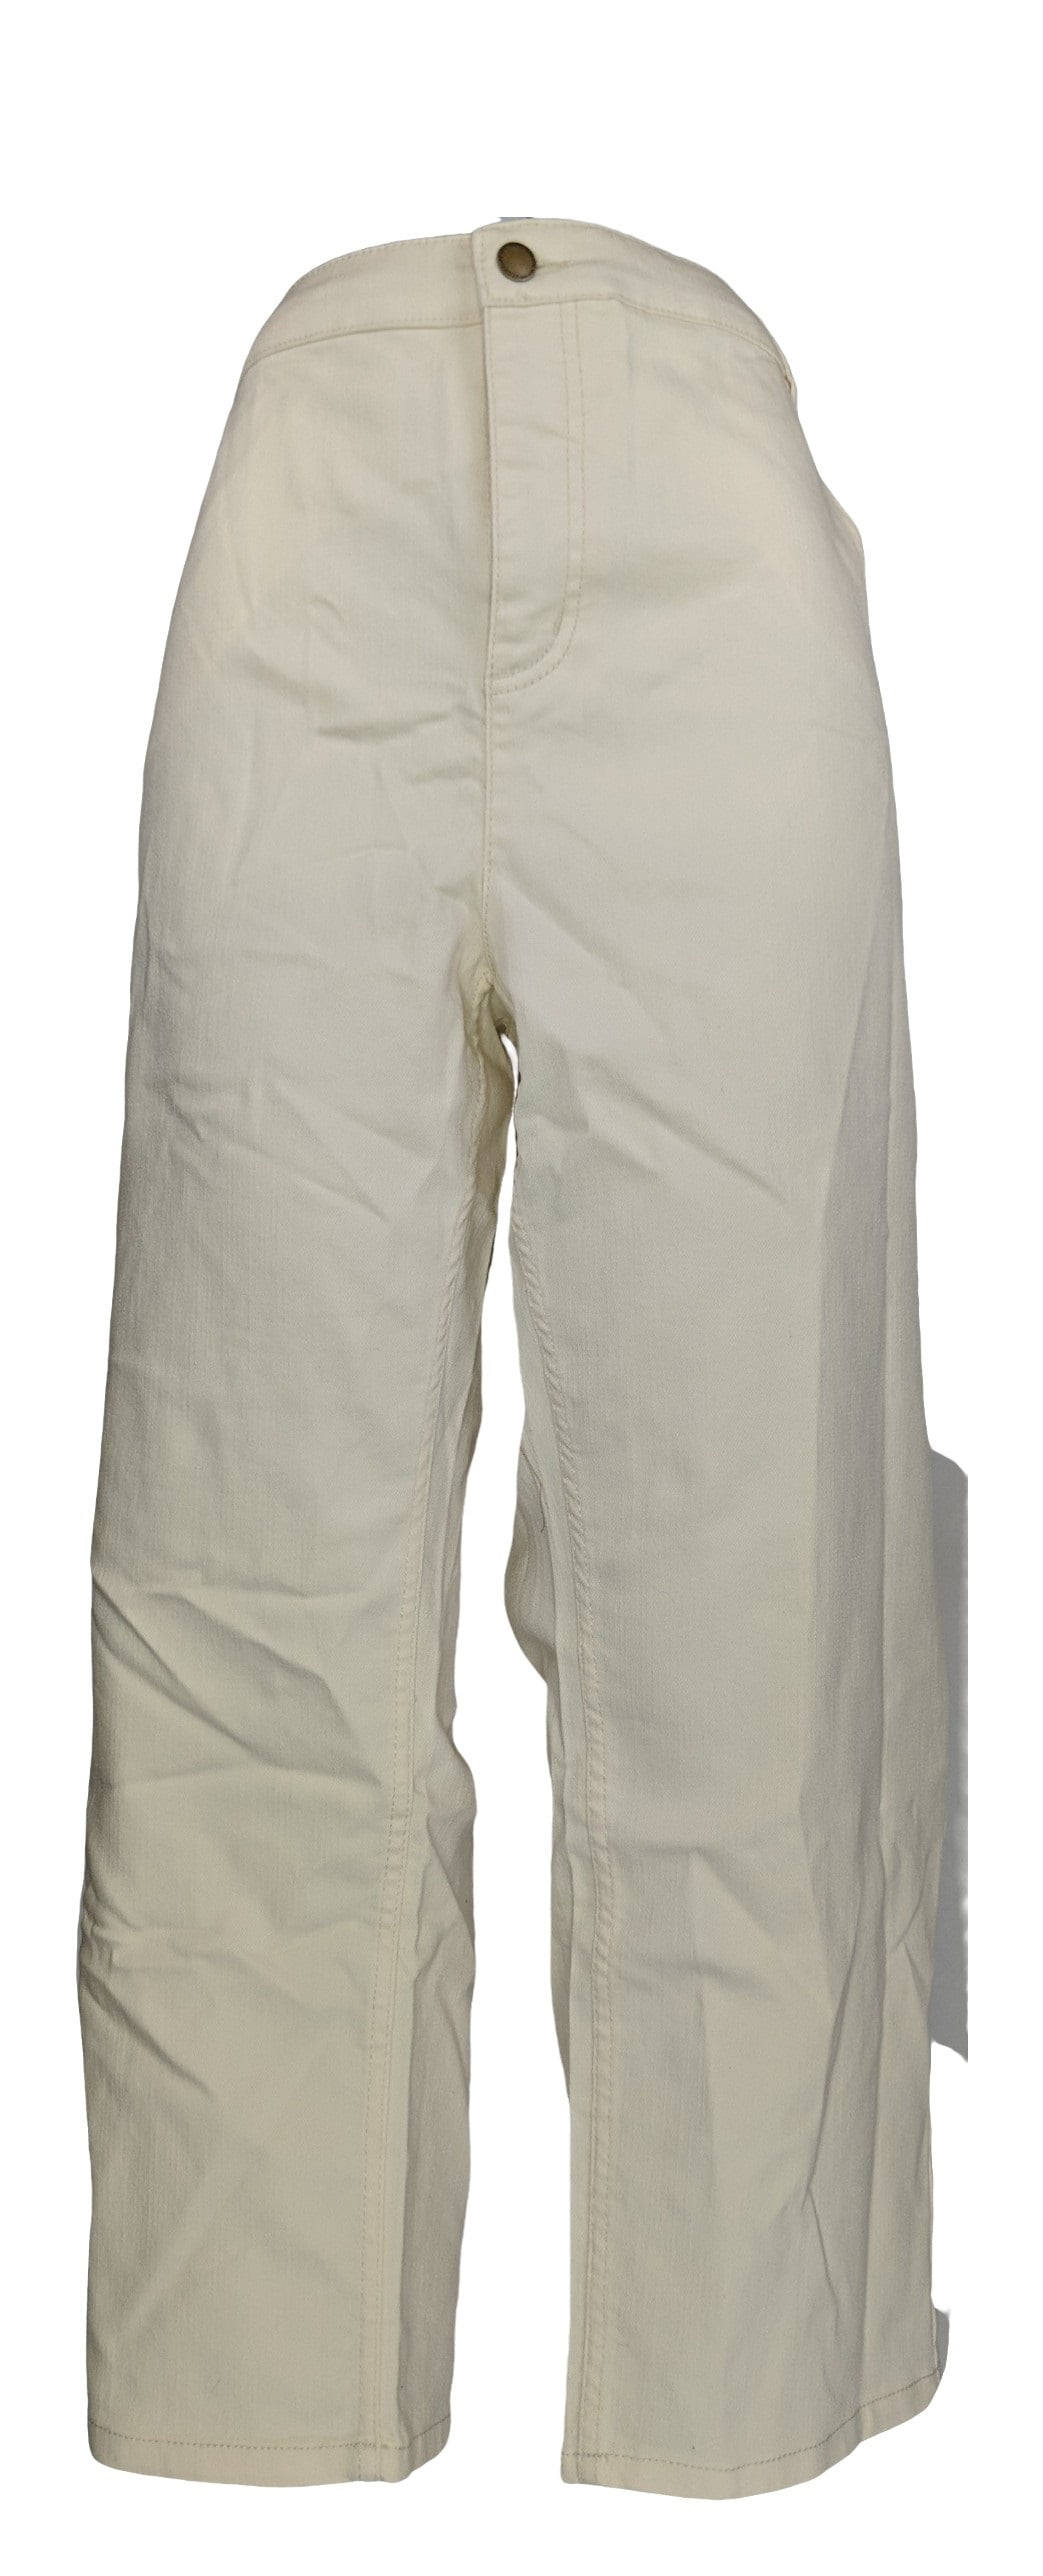 liz claiborne white jeans